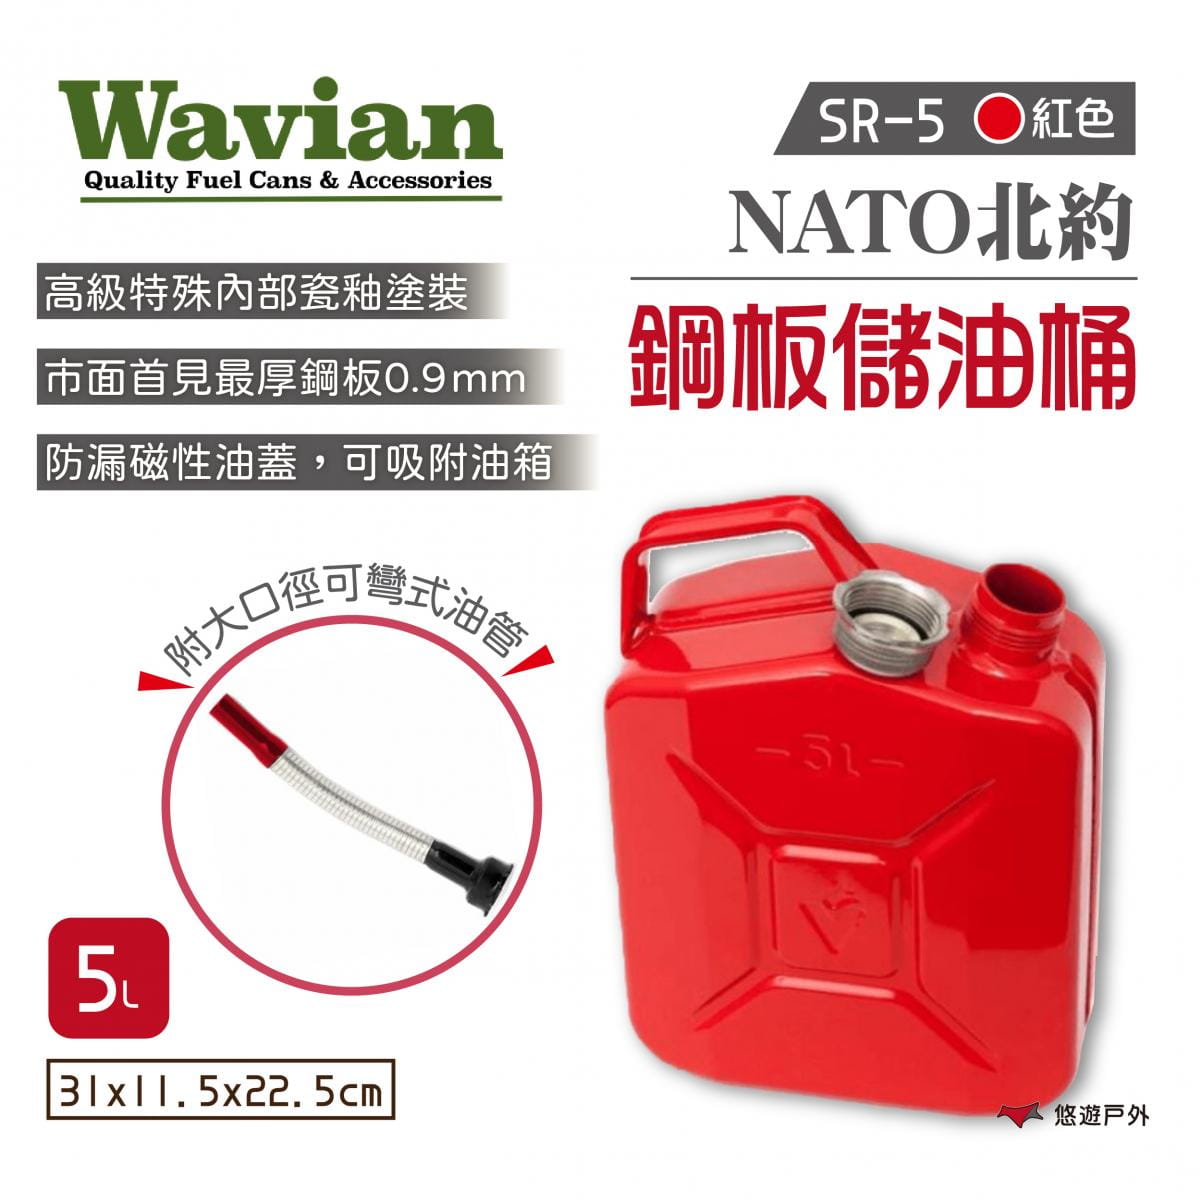 【WAVIAN】NATO北約鋼板儲油桶 紅色5L SR-5 (悠遊戶外) 0